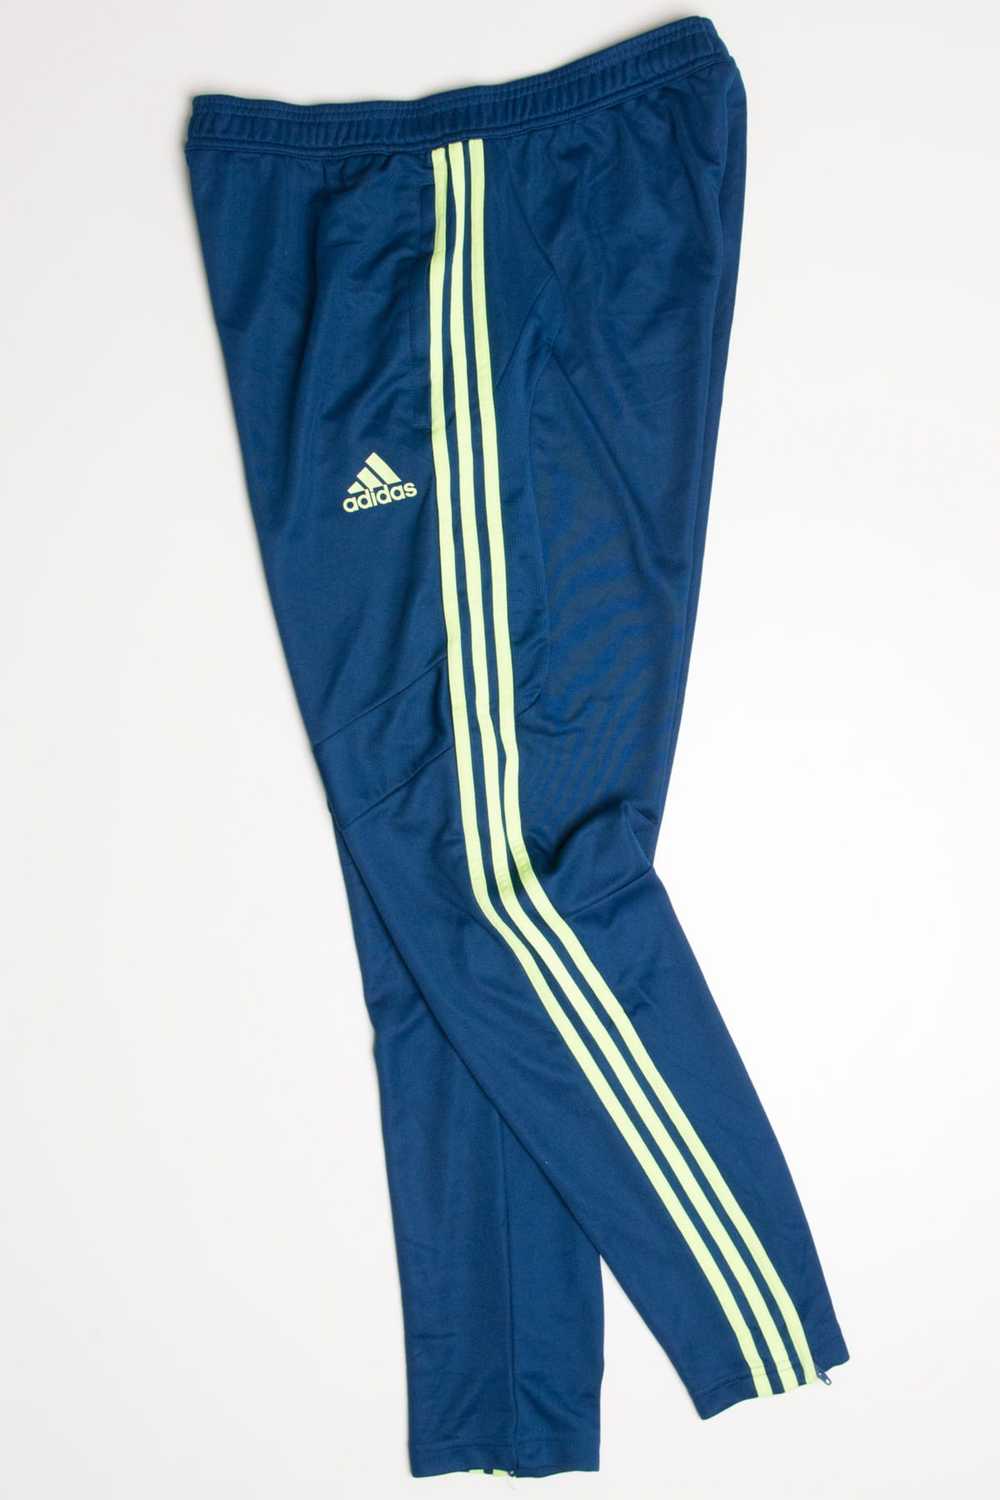 Teal & Lime Adidas Soccer Pants (sz. L) - image 4